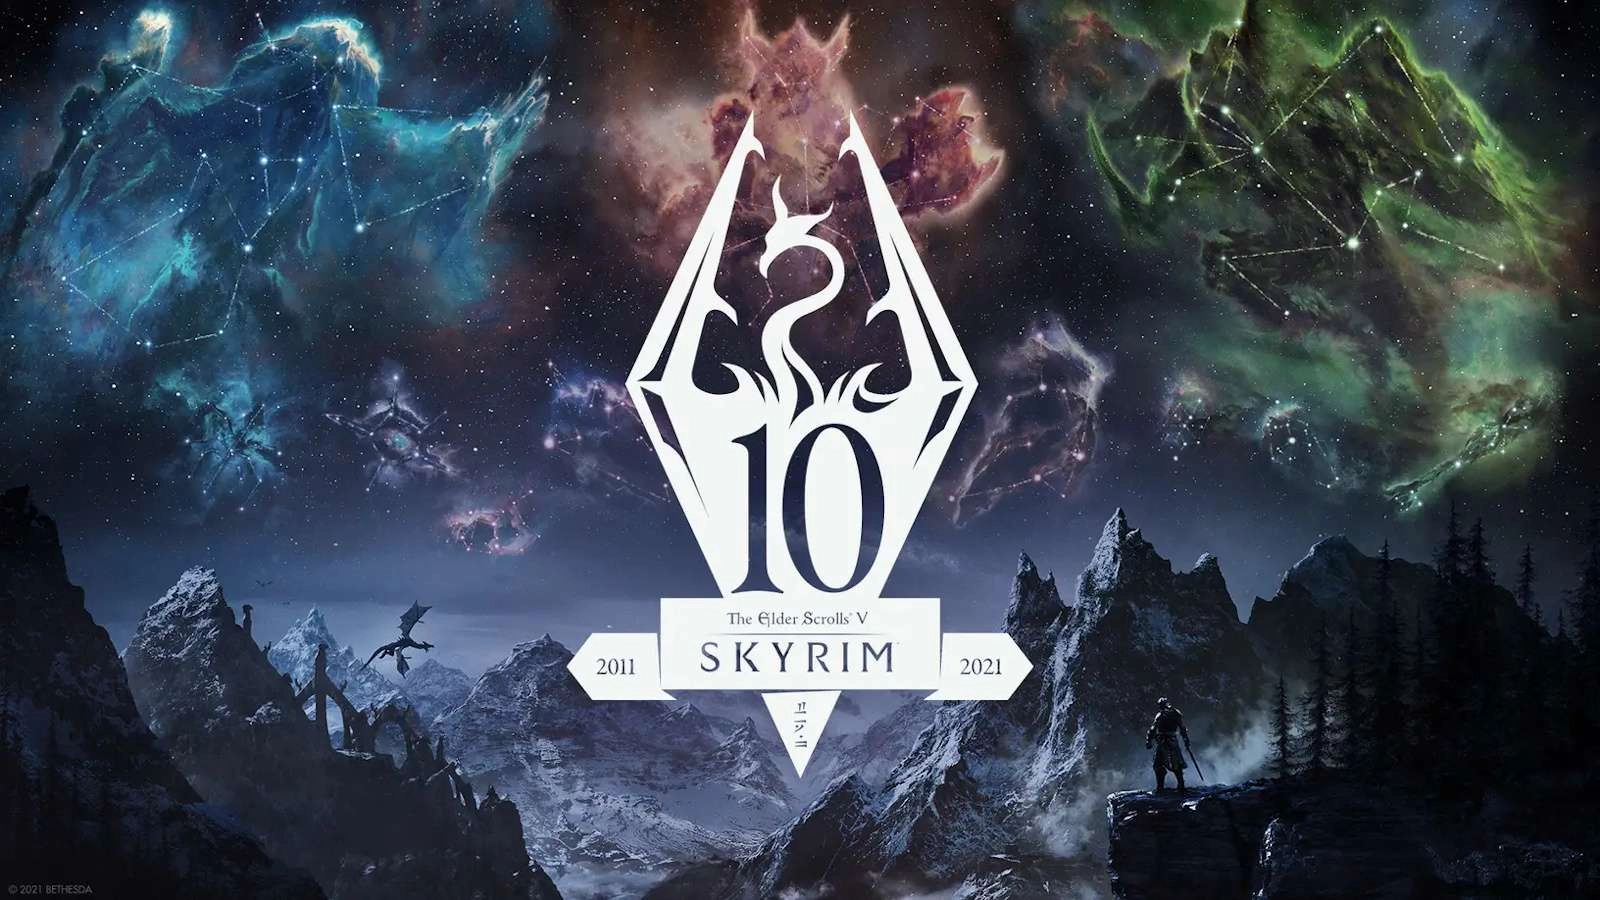 Skyrim 10th anniversary concert